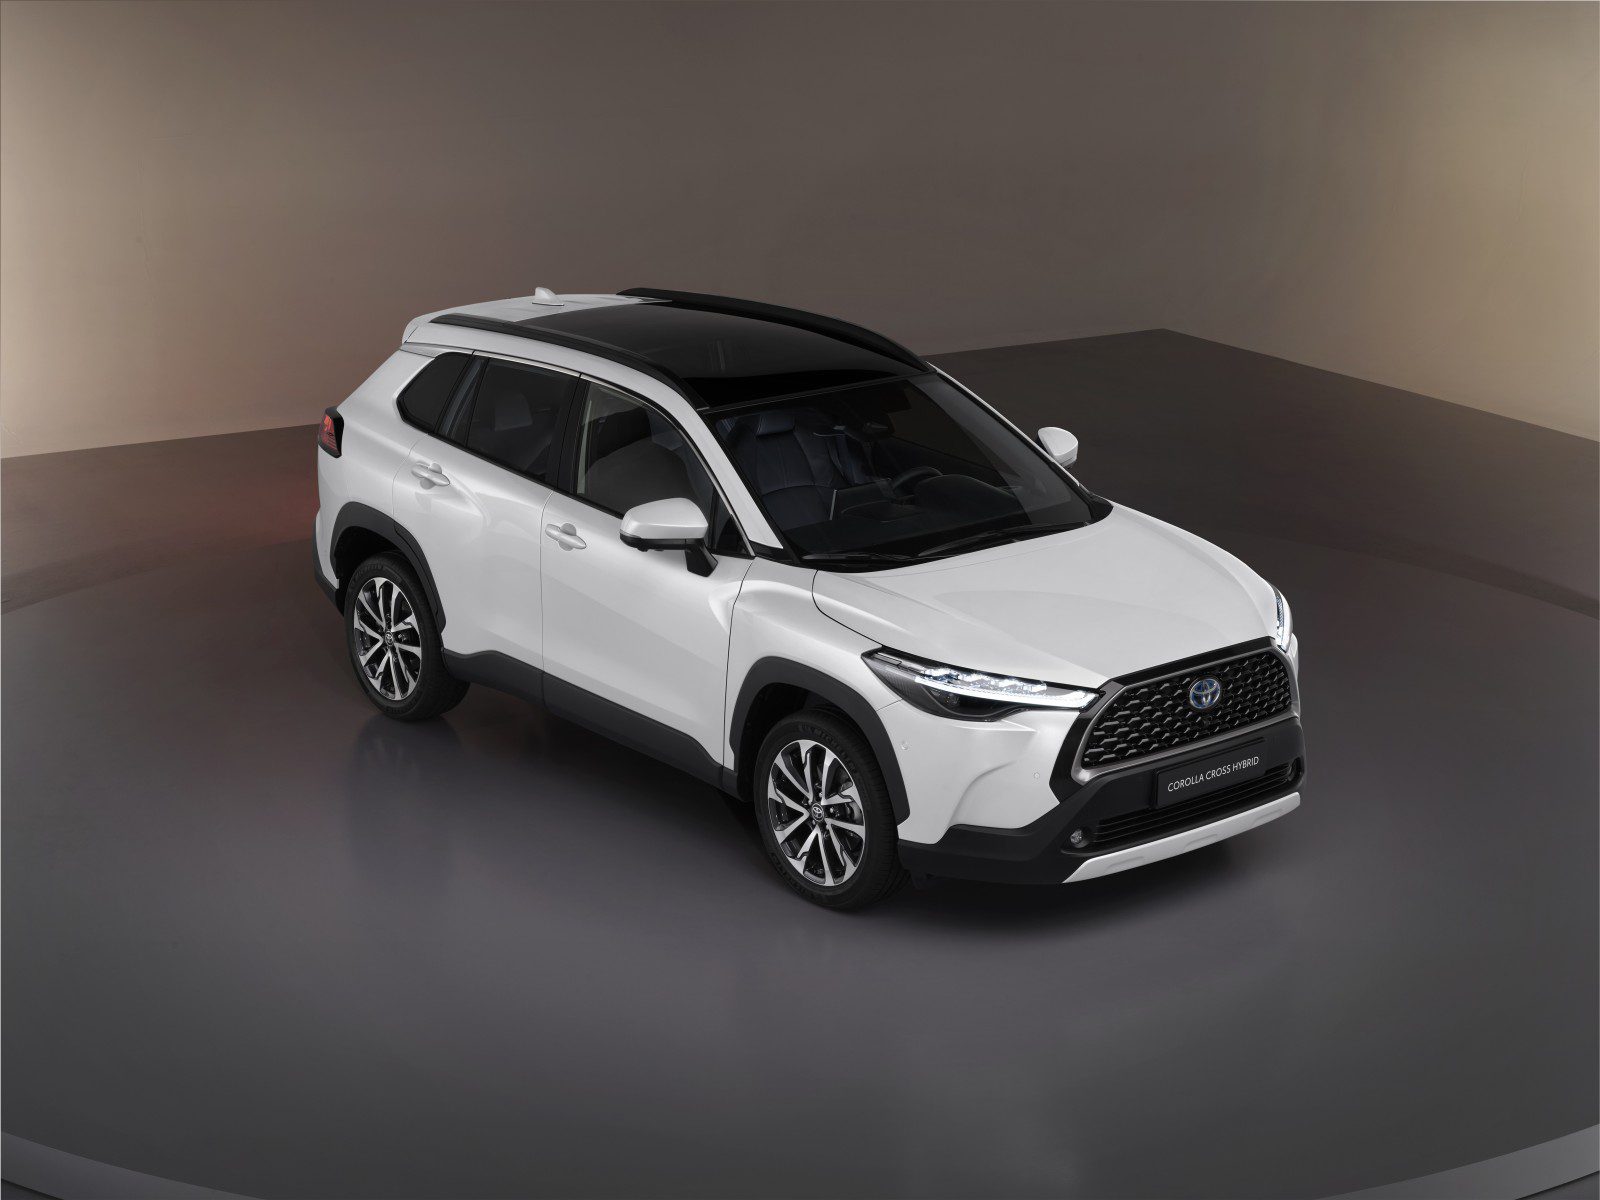 Toyota presenterar en “ny” kompakt SUV, Corolla Cross